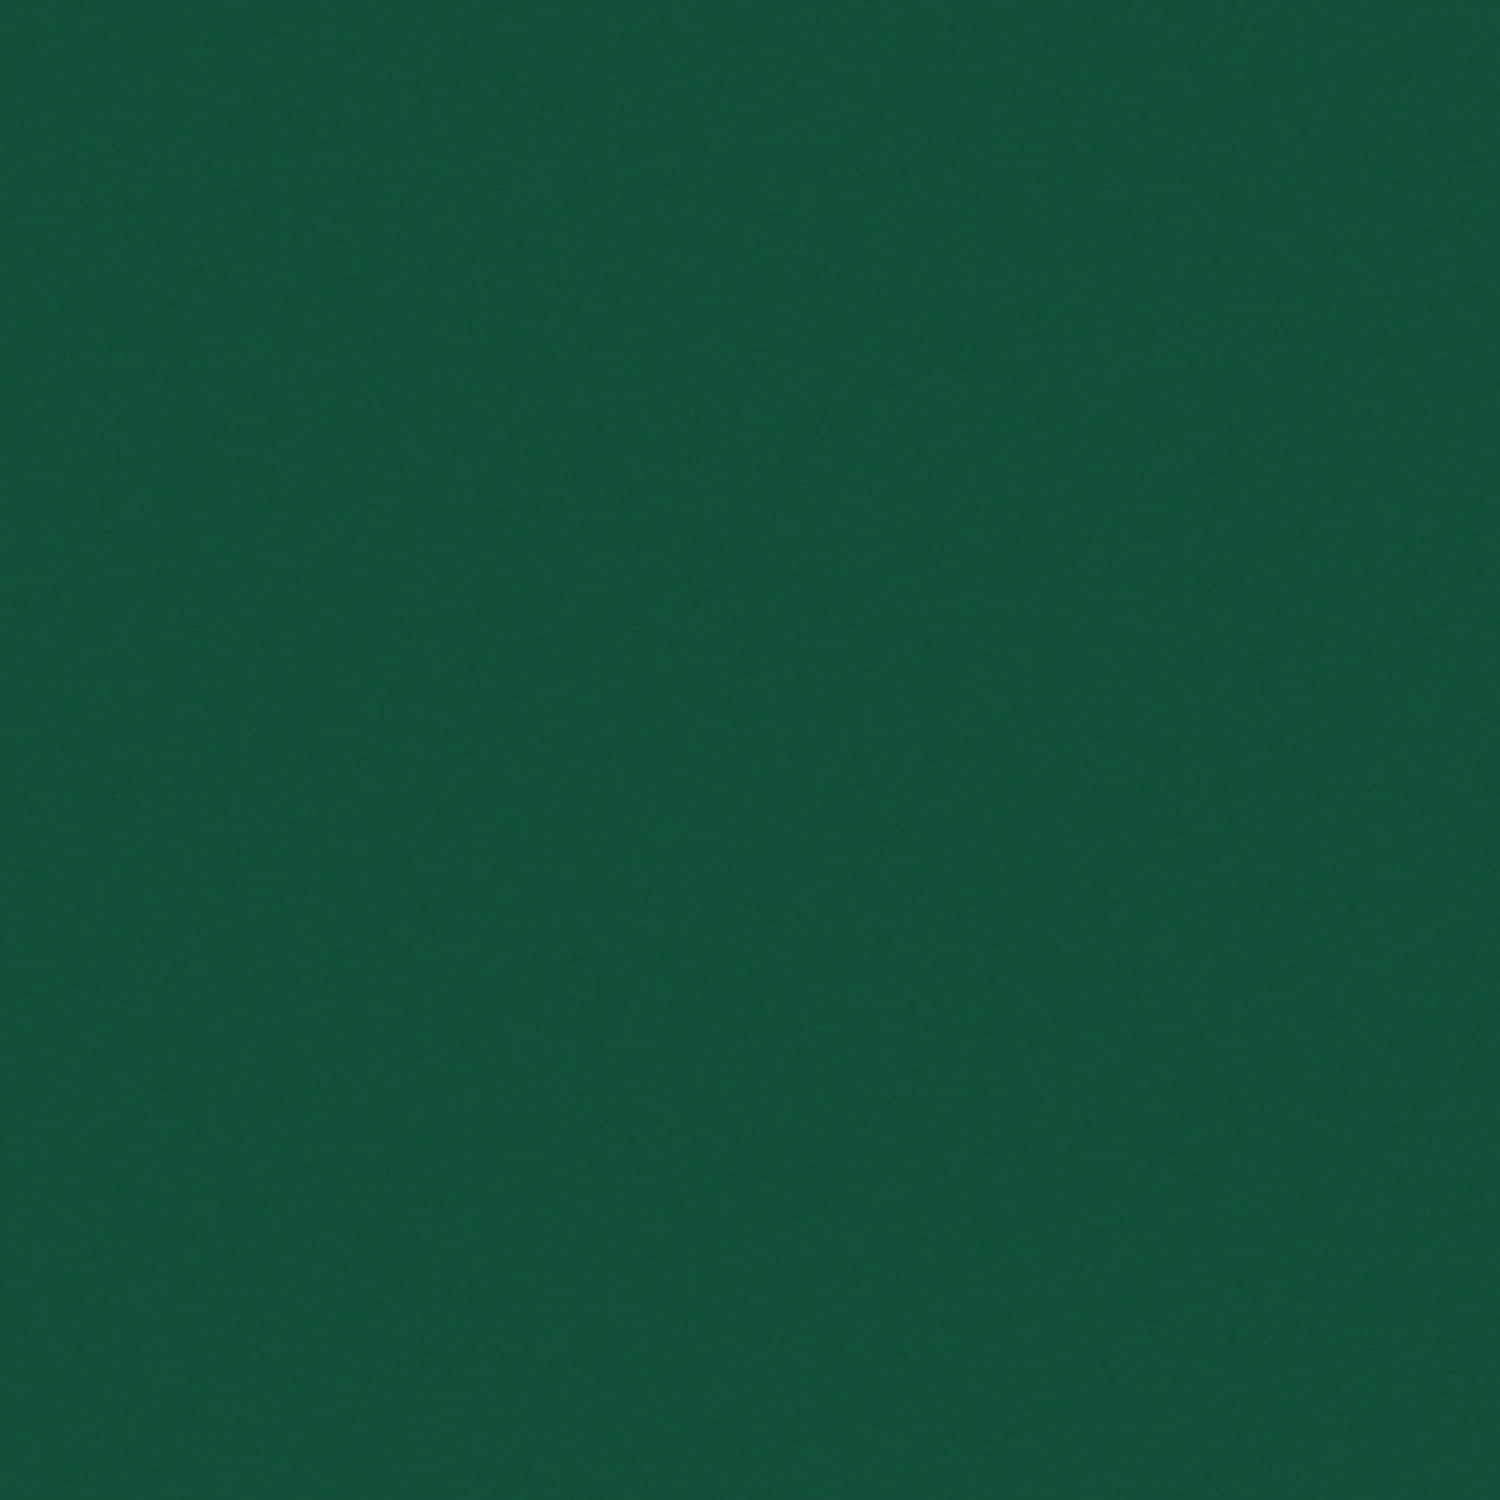 Buy WILSONART HUNTER GREEN D79-60: 4' x 8' x 0.7MM Online | Construction Finishes | Qetaat.com